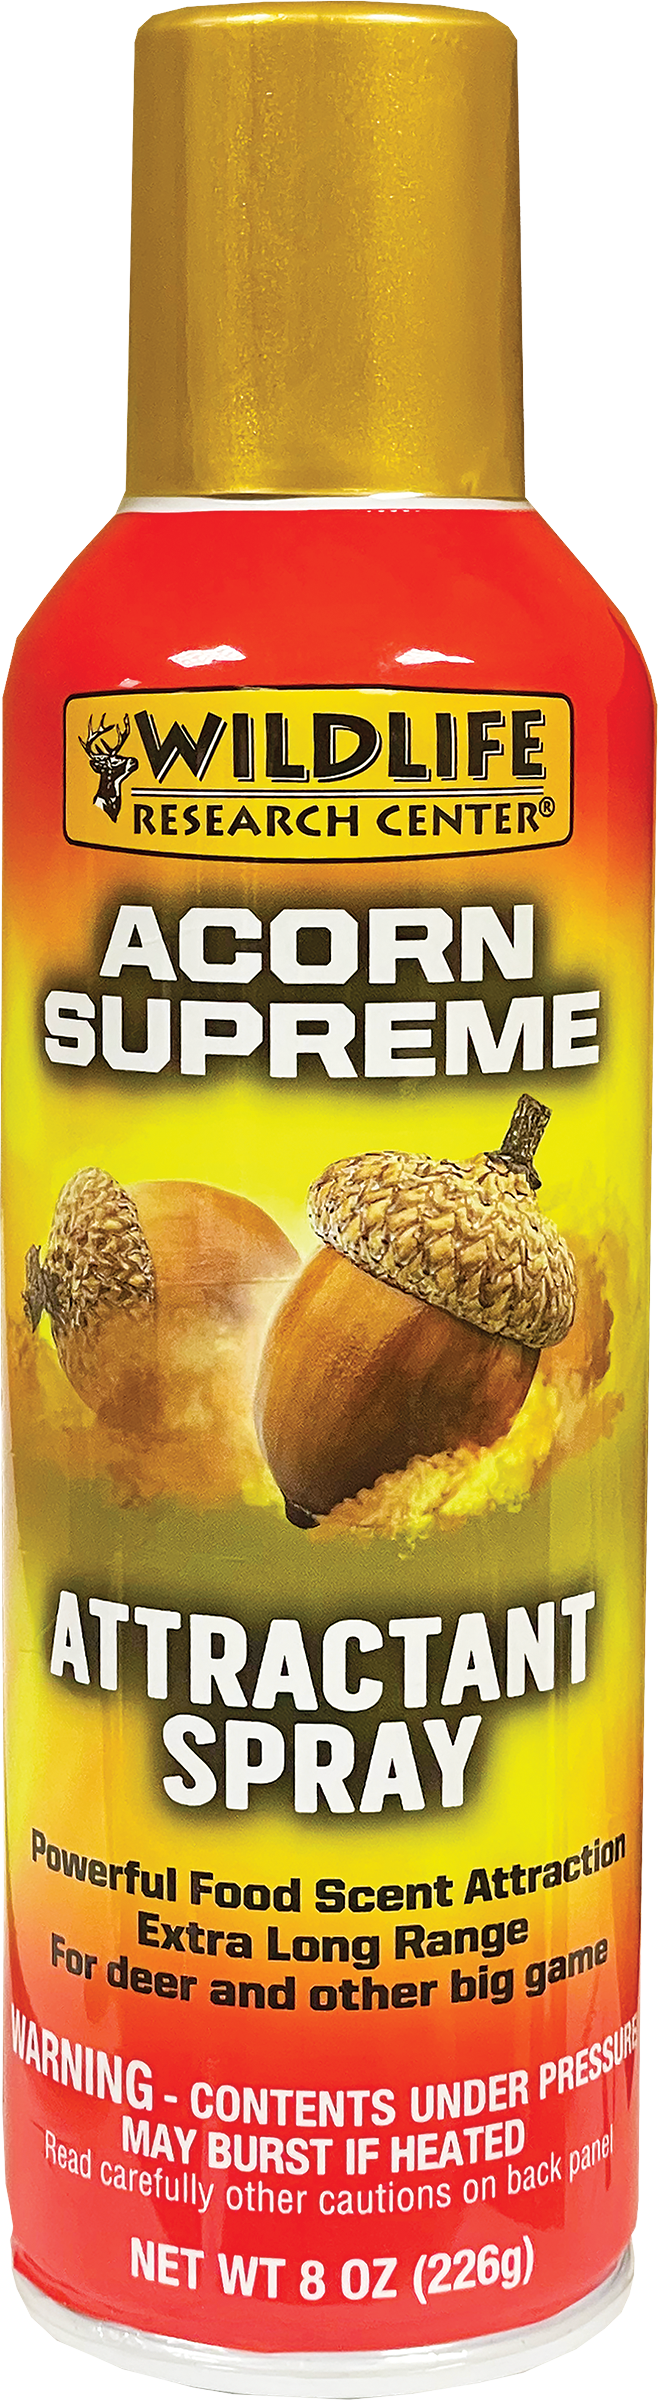 Acorn Supreme Attractant Spray